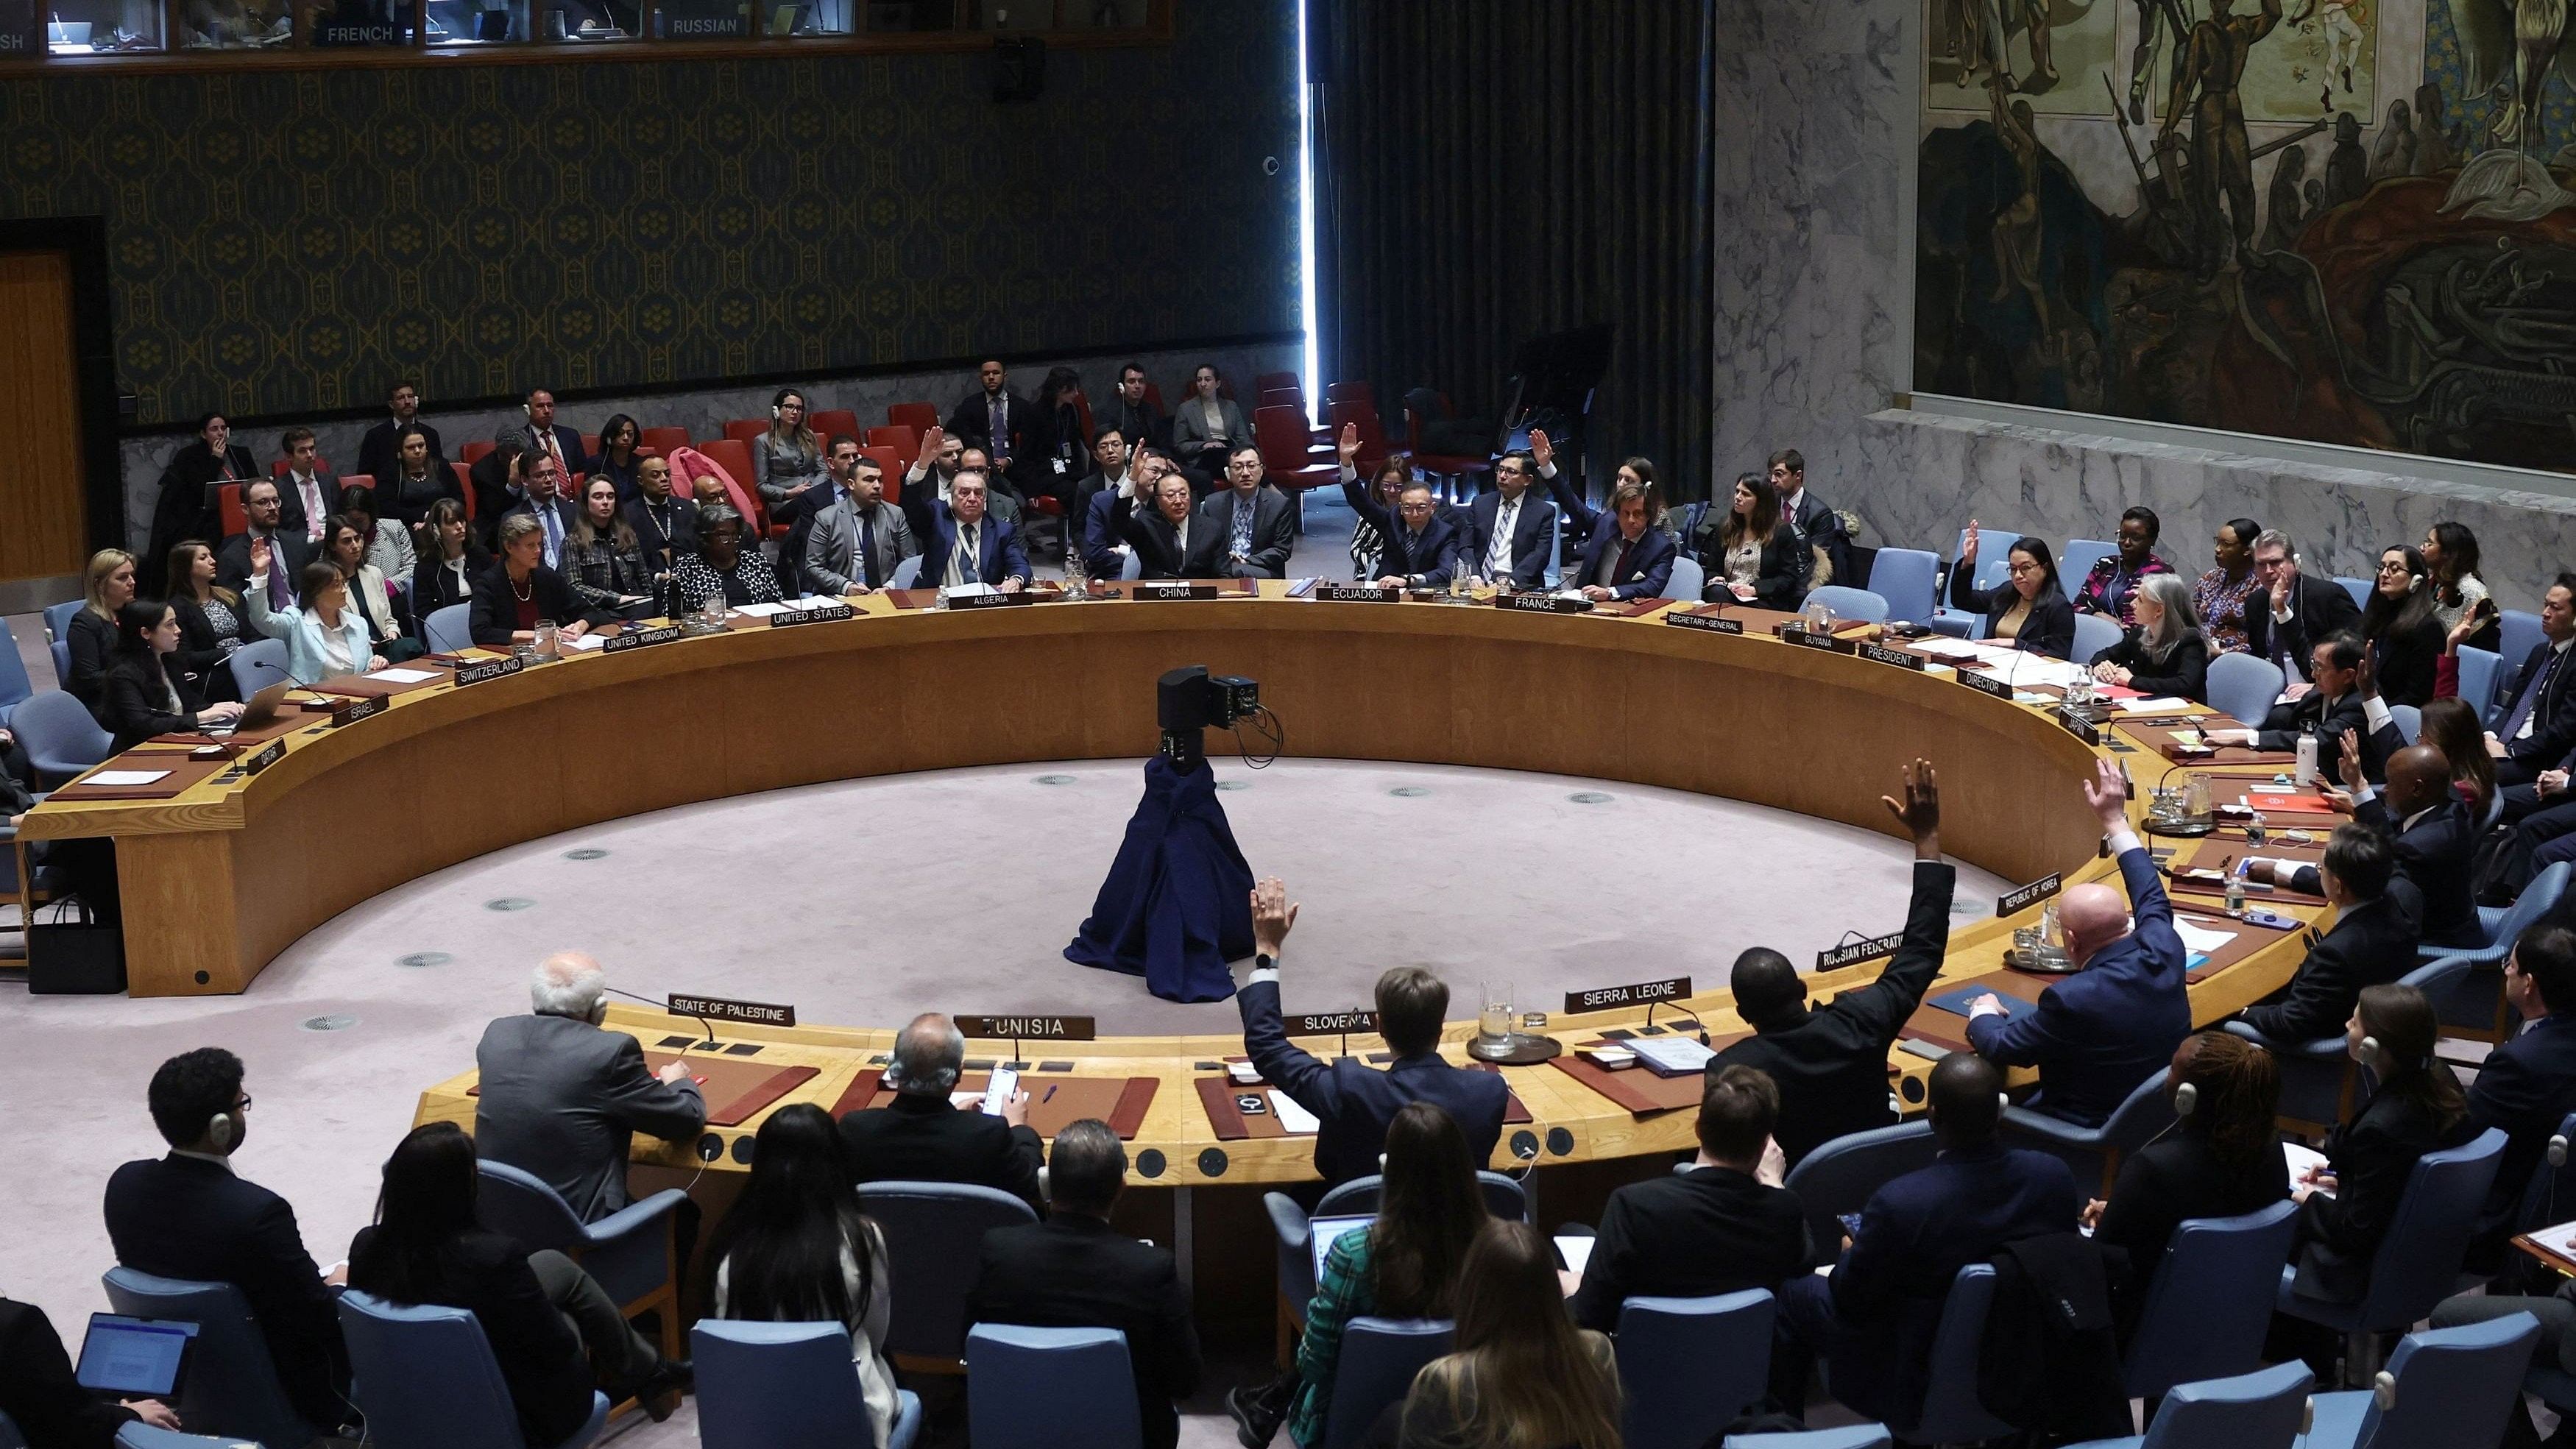 <div class="paragraphs"><p>A photo of the UN Security Council in session.</p></div>